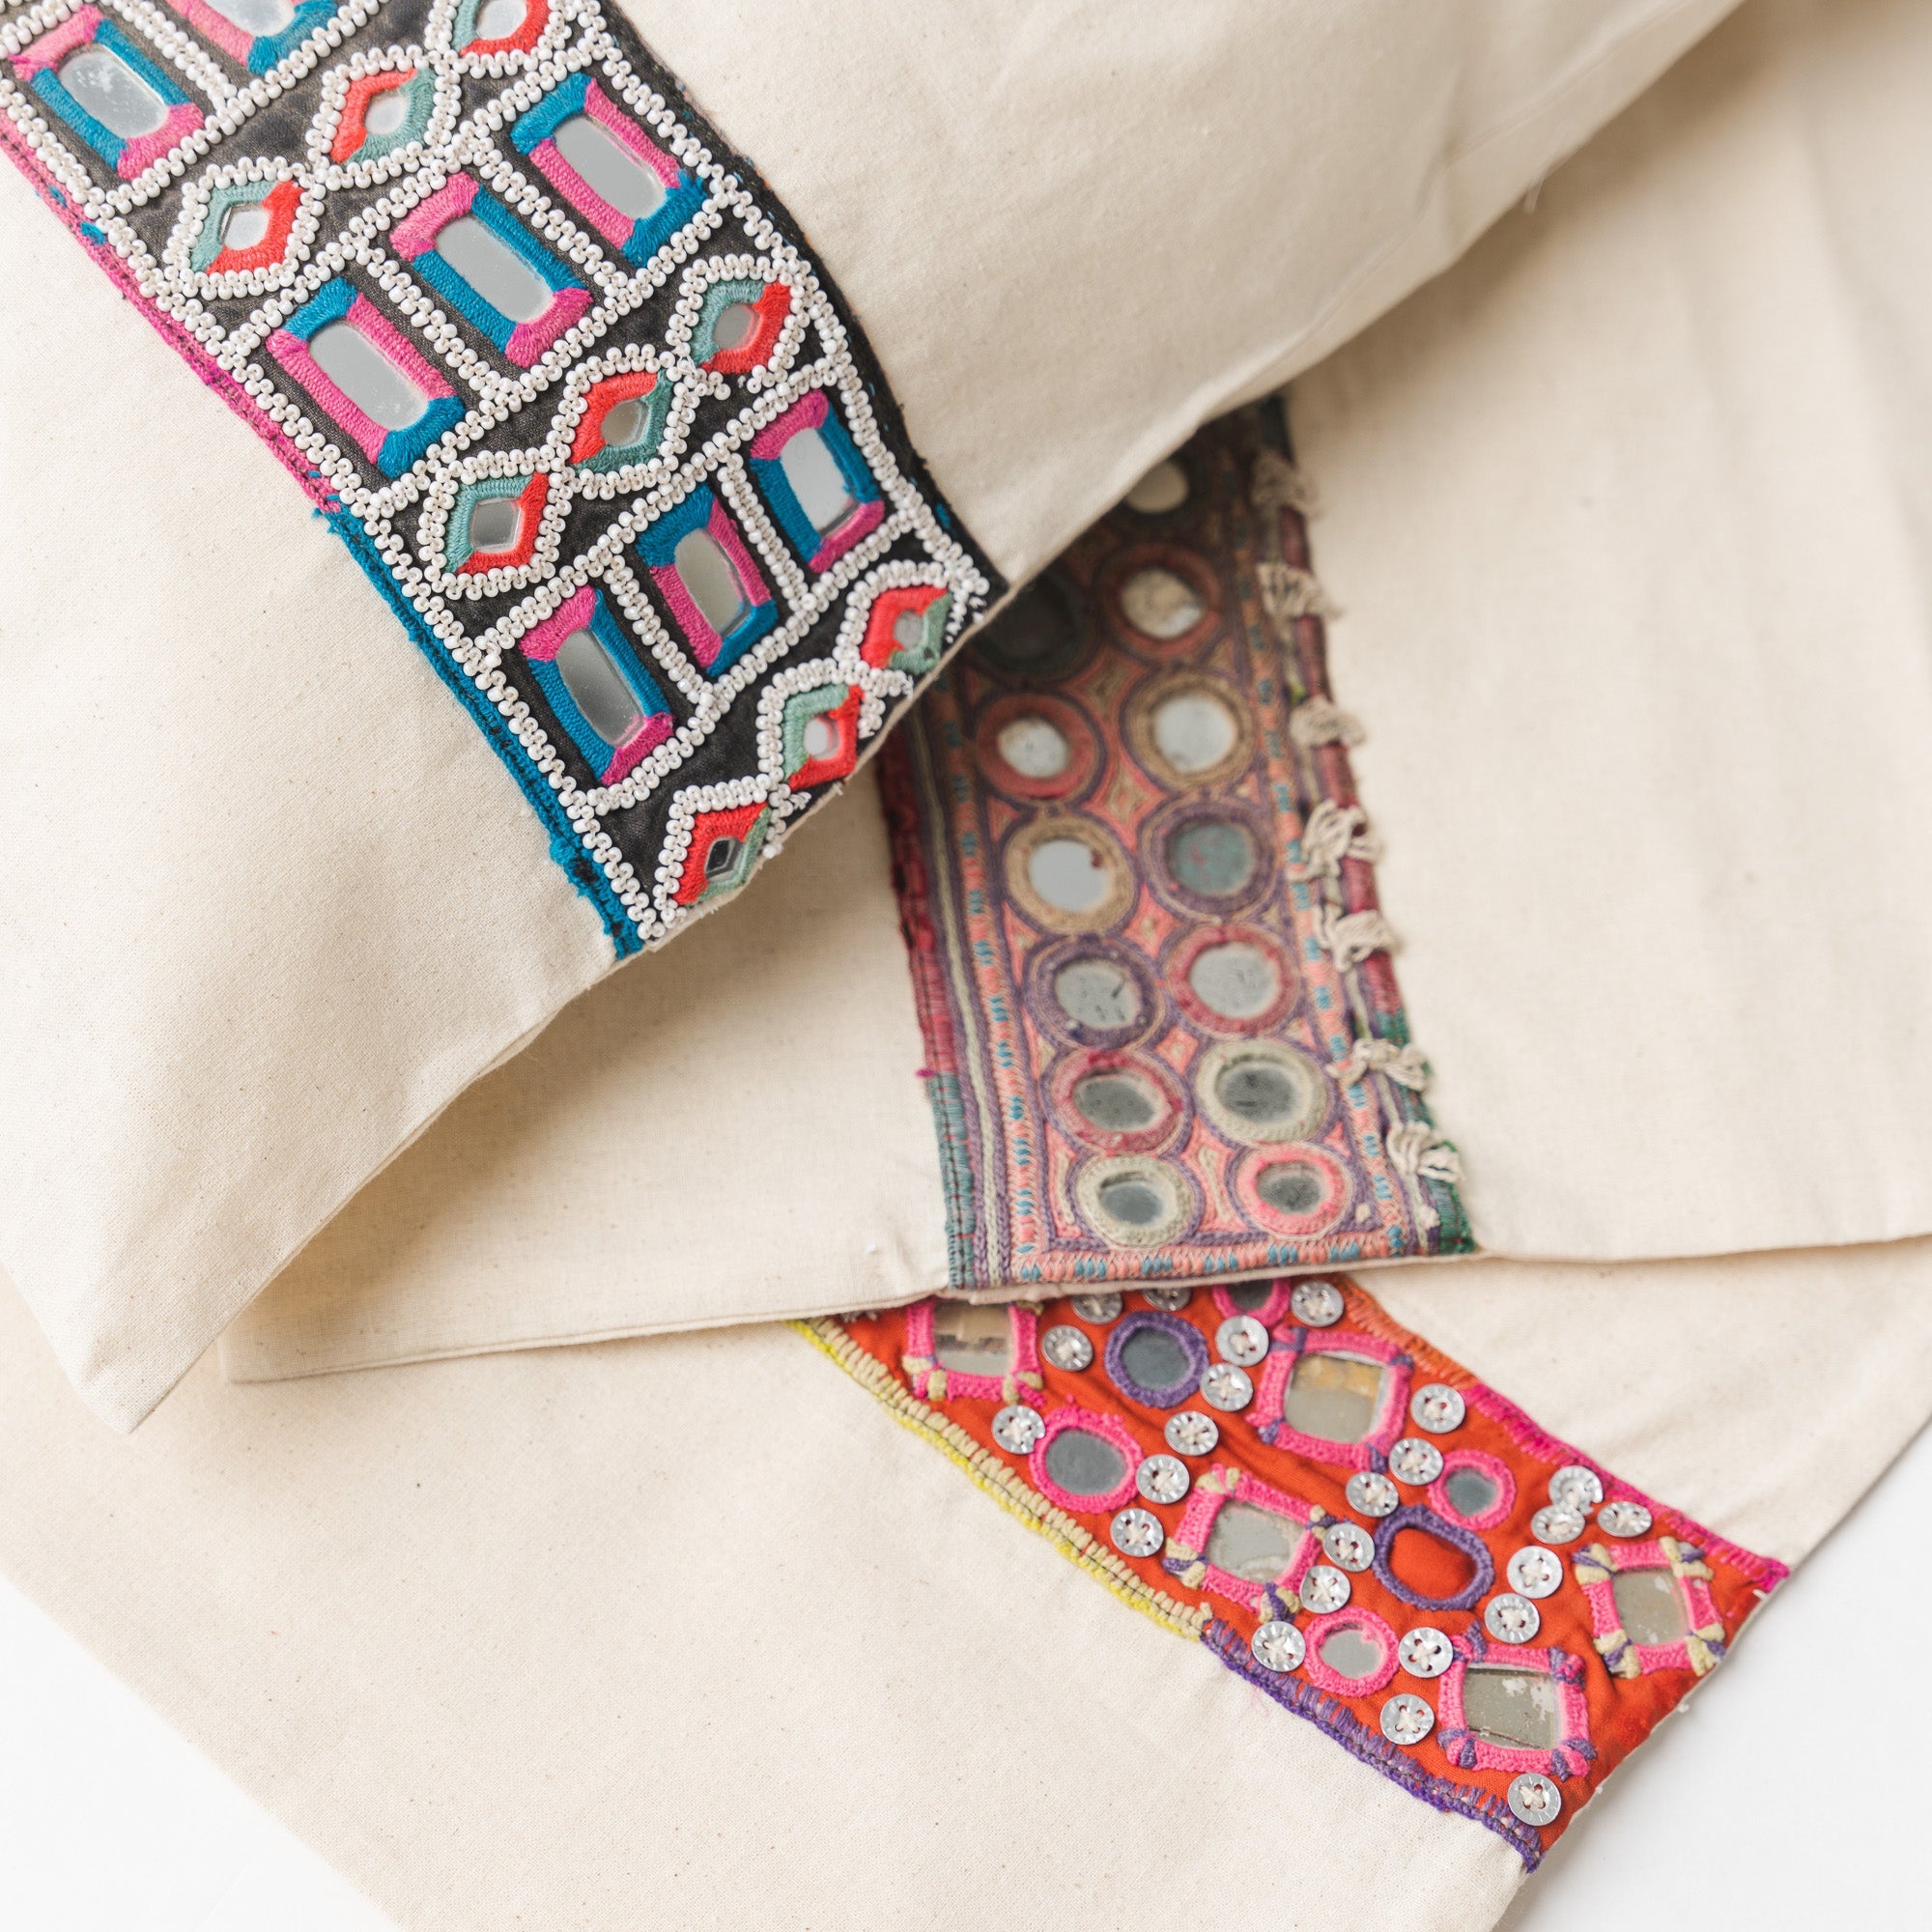 bespoke pillows with vintage Rajasthan trims